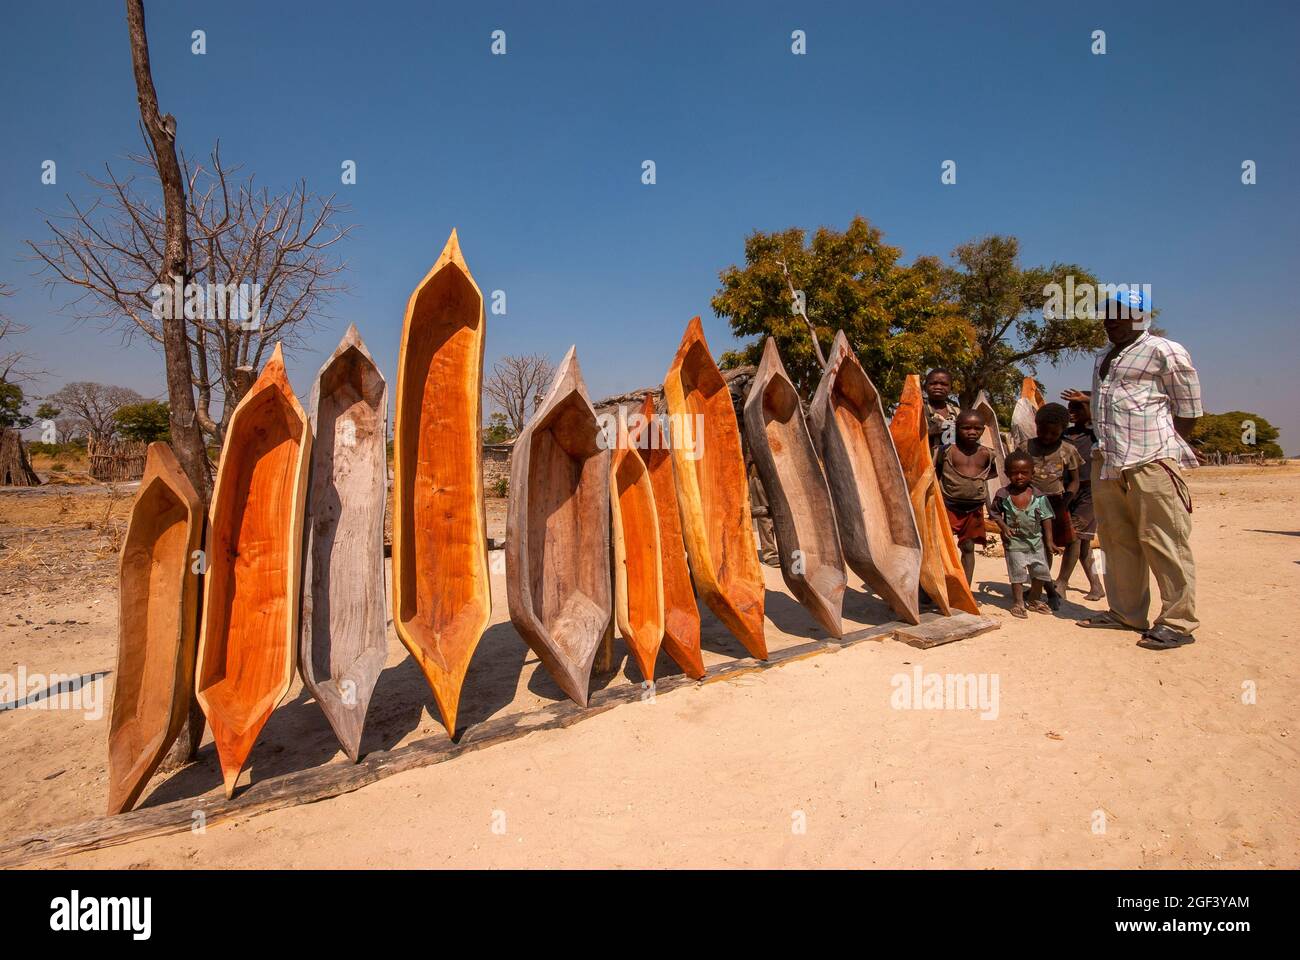 Souvenirs africanos para turistas, mini botes mokoro a la venta en la Franja de Caprivi, en la frontera con Angola, Namibia Foto de stock